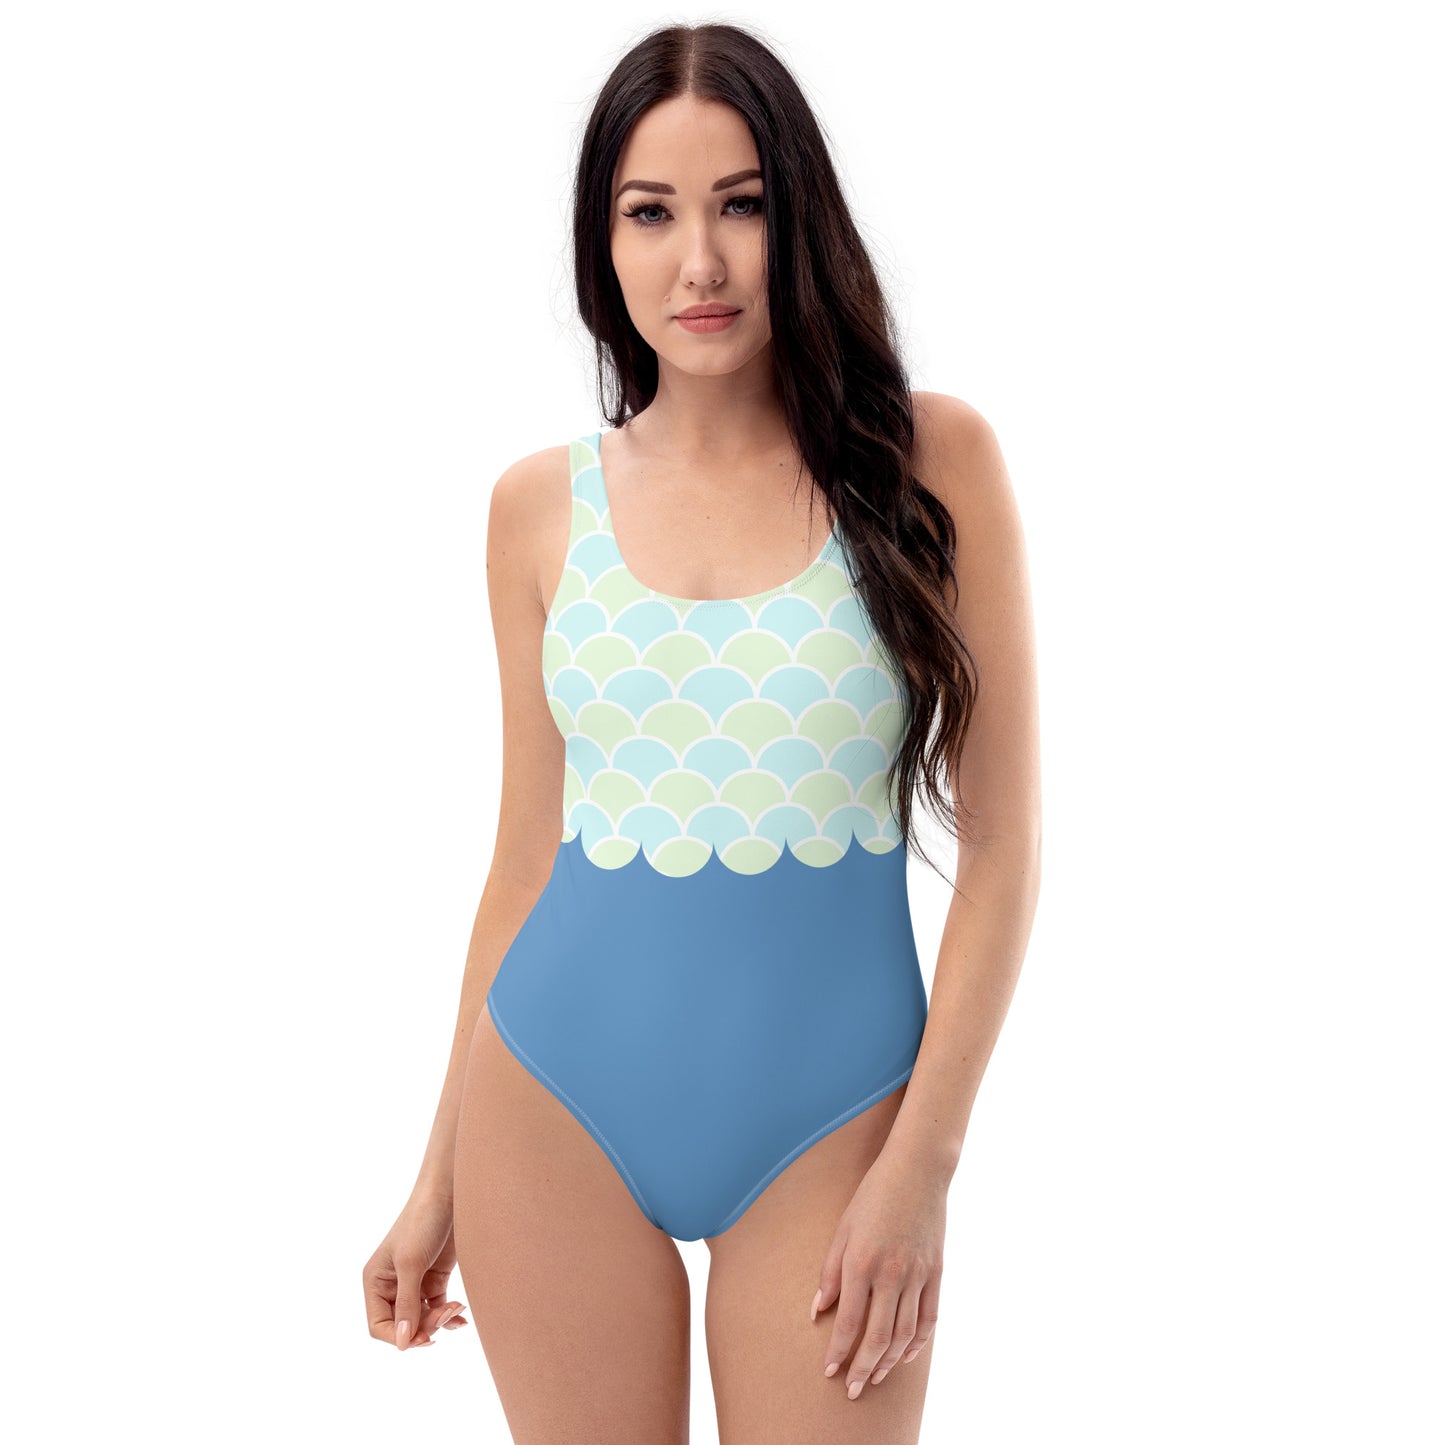 Mermaid Scales One-Piece Swimsuit